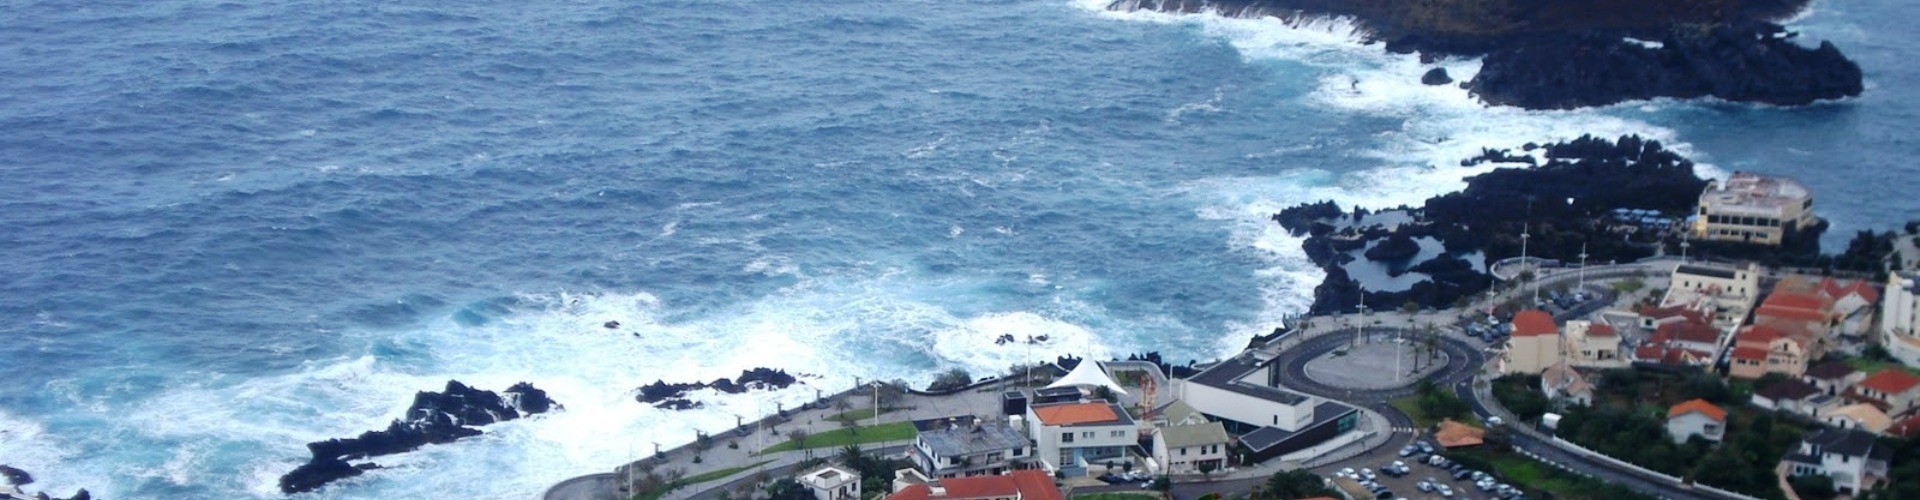 Miradouro da Santa Viewpoint, Porto Moniz, Madeira Island